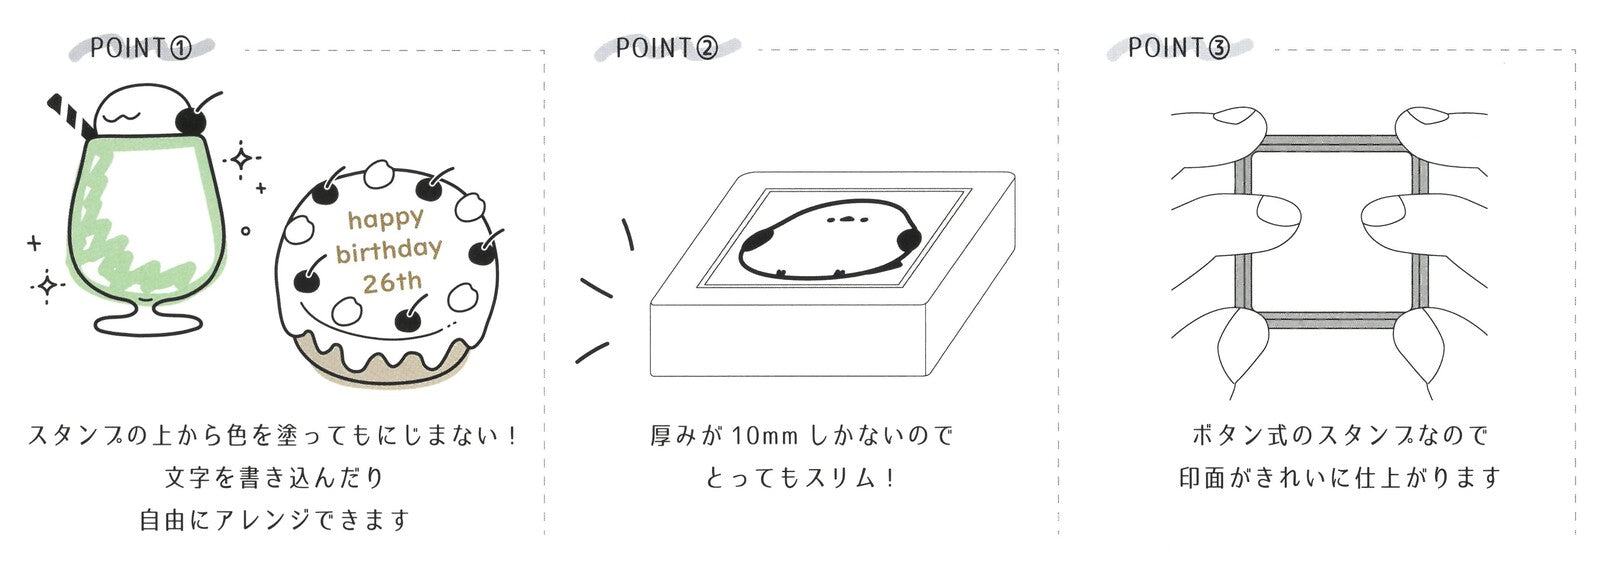 PiTAOSHI Button Type Penetrating Stamp - Memo Pad - Techo Treats